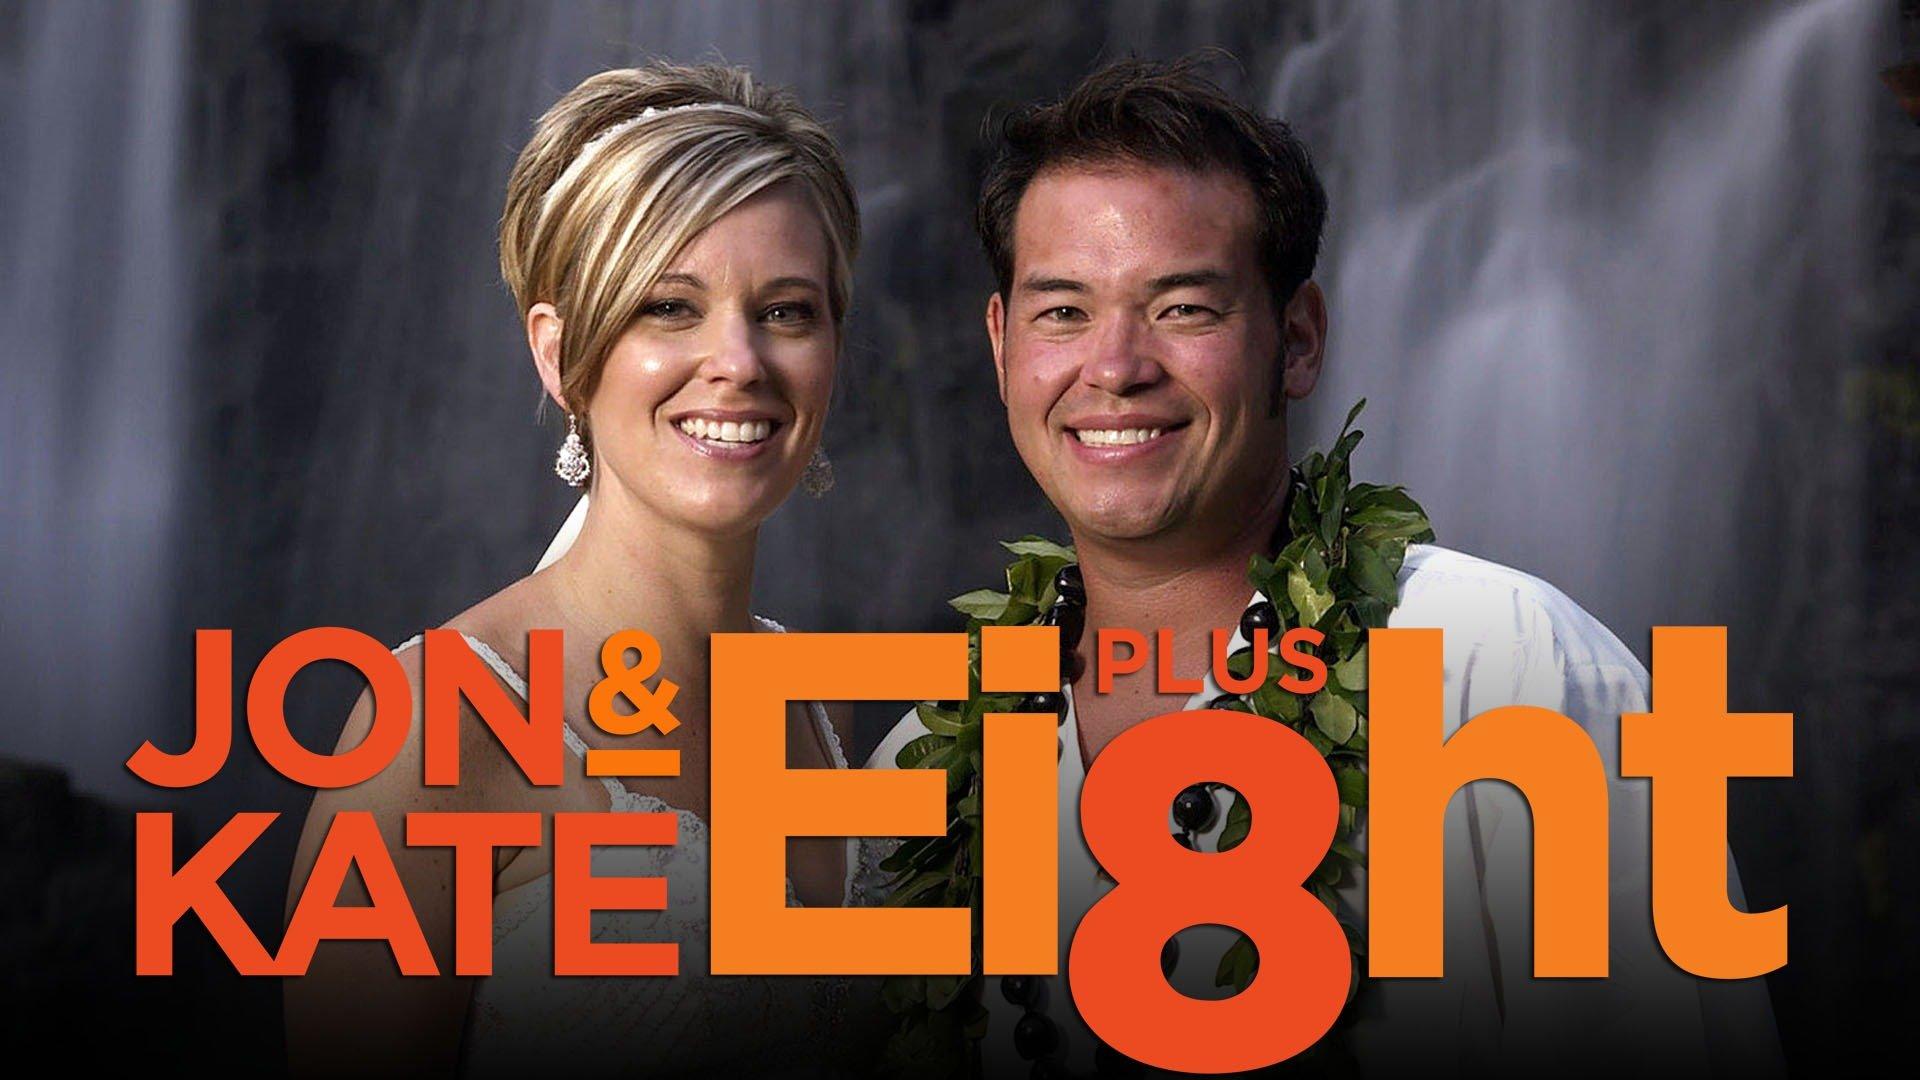 Watch Jon & Kate Plus 8 Streaming Online on Philo (Free Trial)